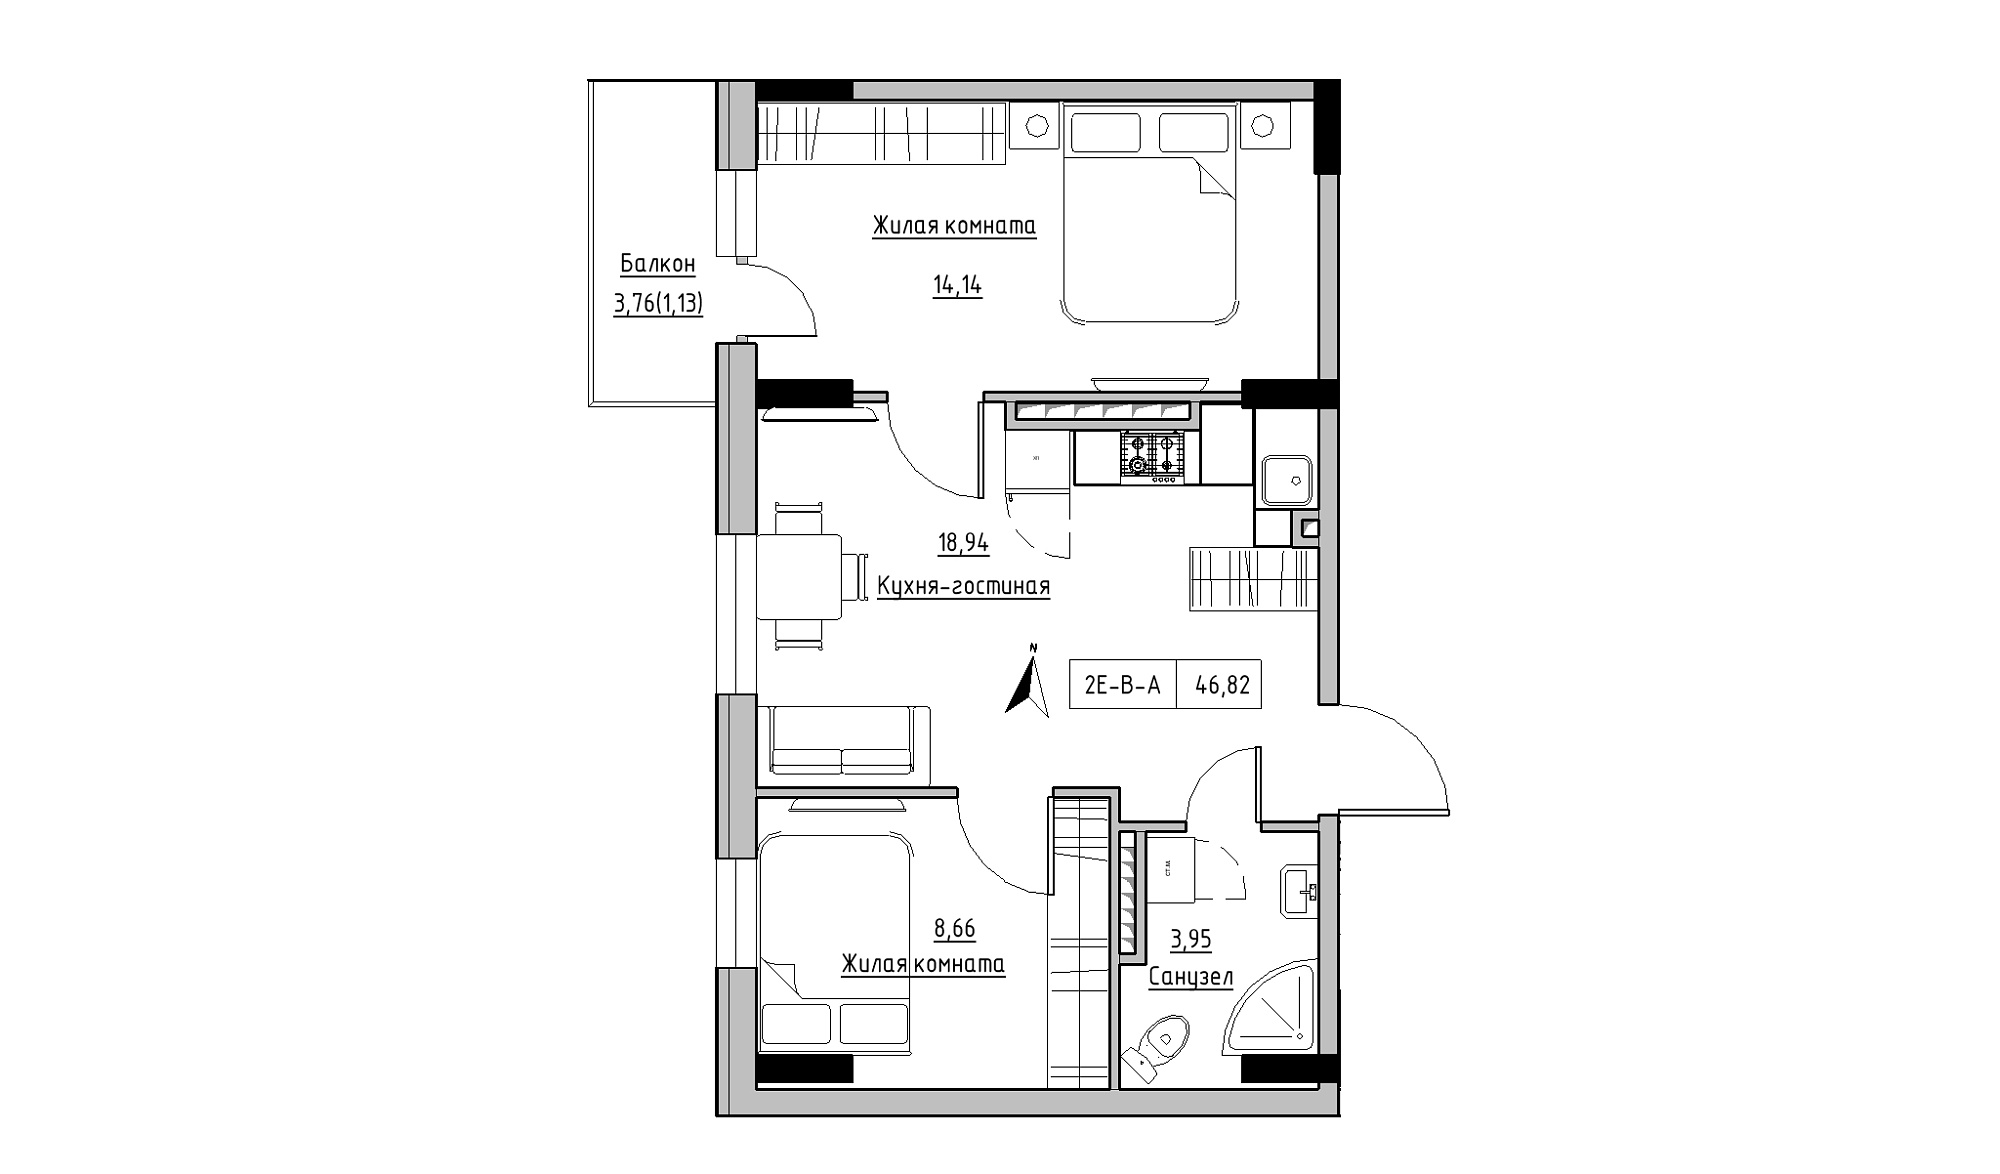 Planning 2-rm flats area 46.82m2, KS-025-05/0003.